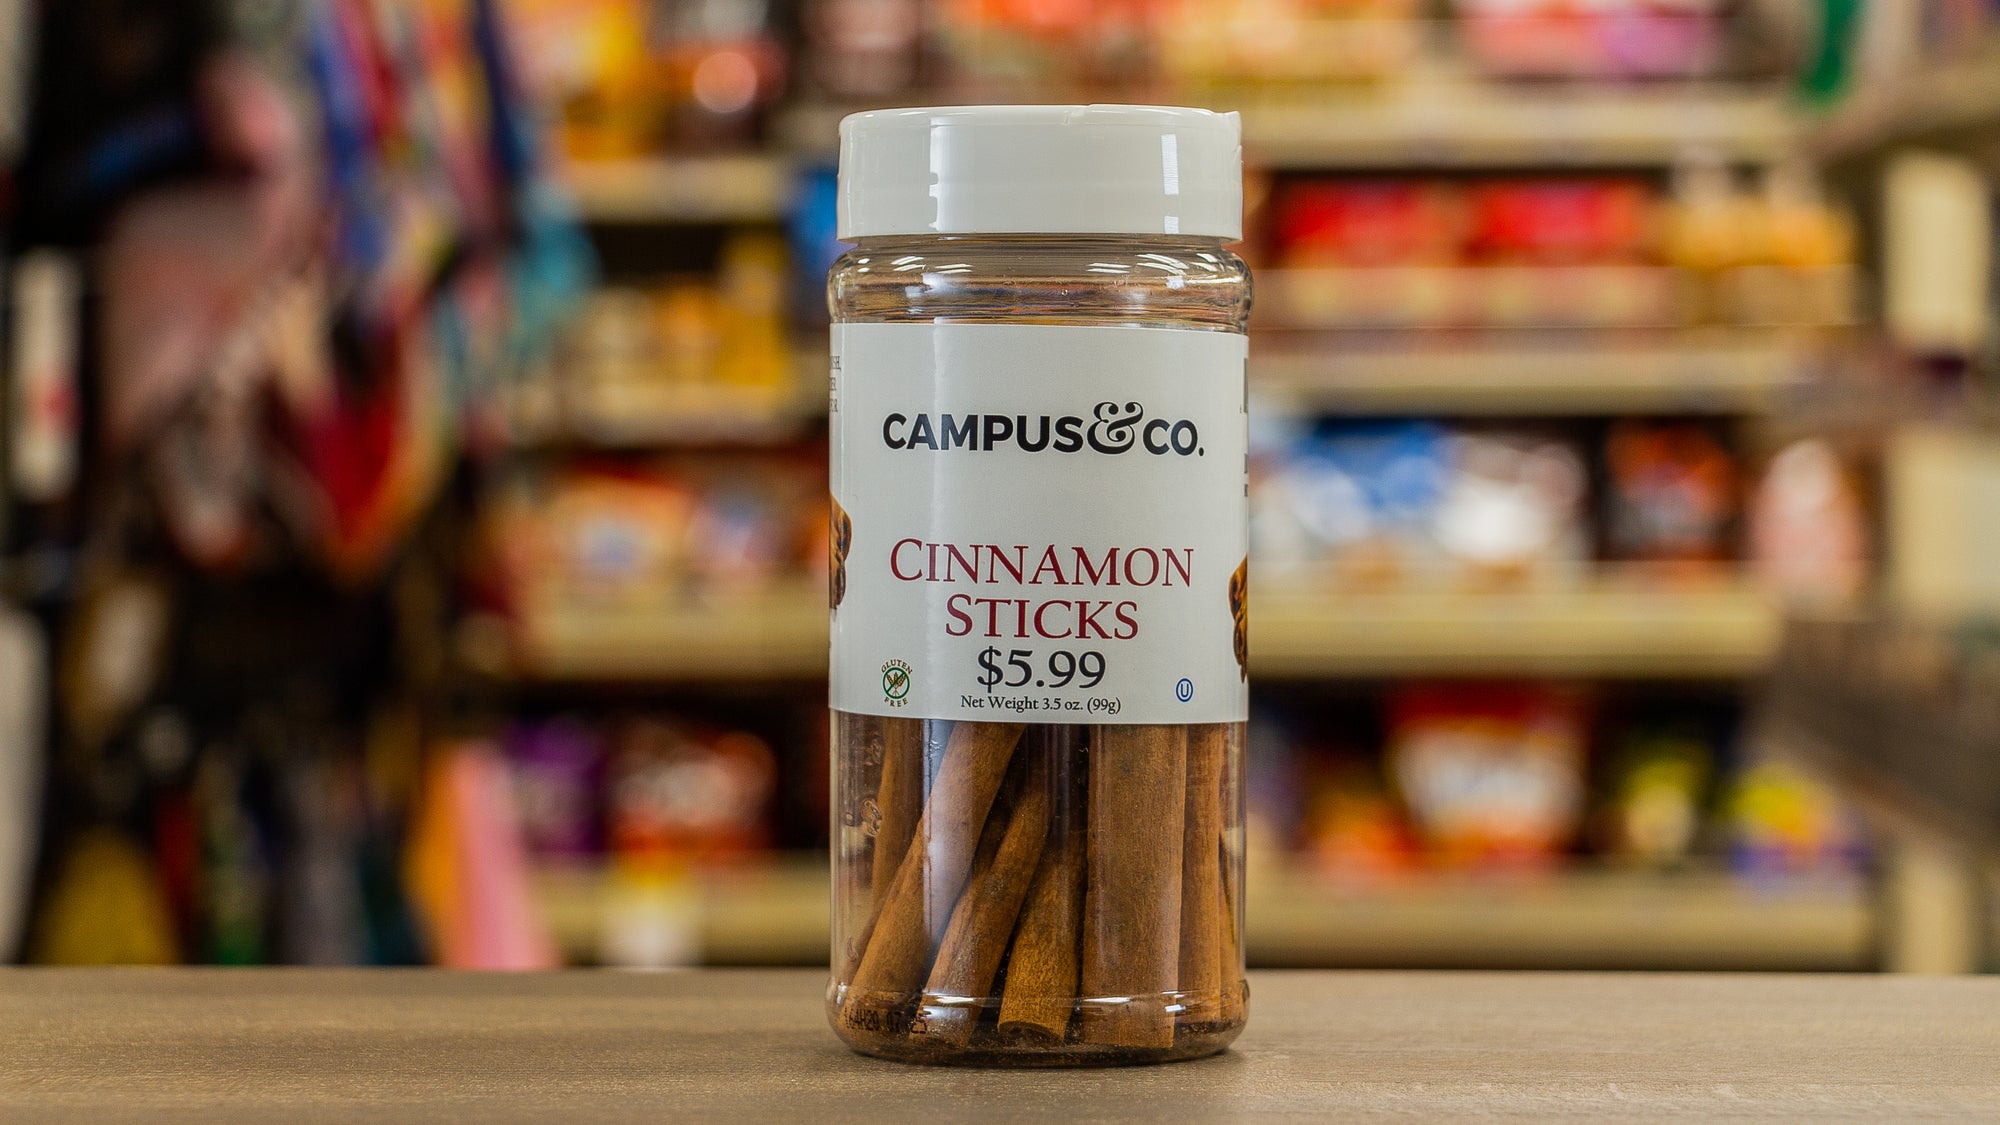 Campus&Co. Cinnamon Sticks 4" 3.5oz